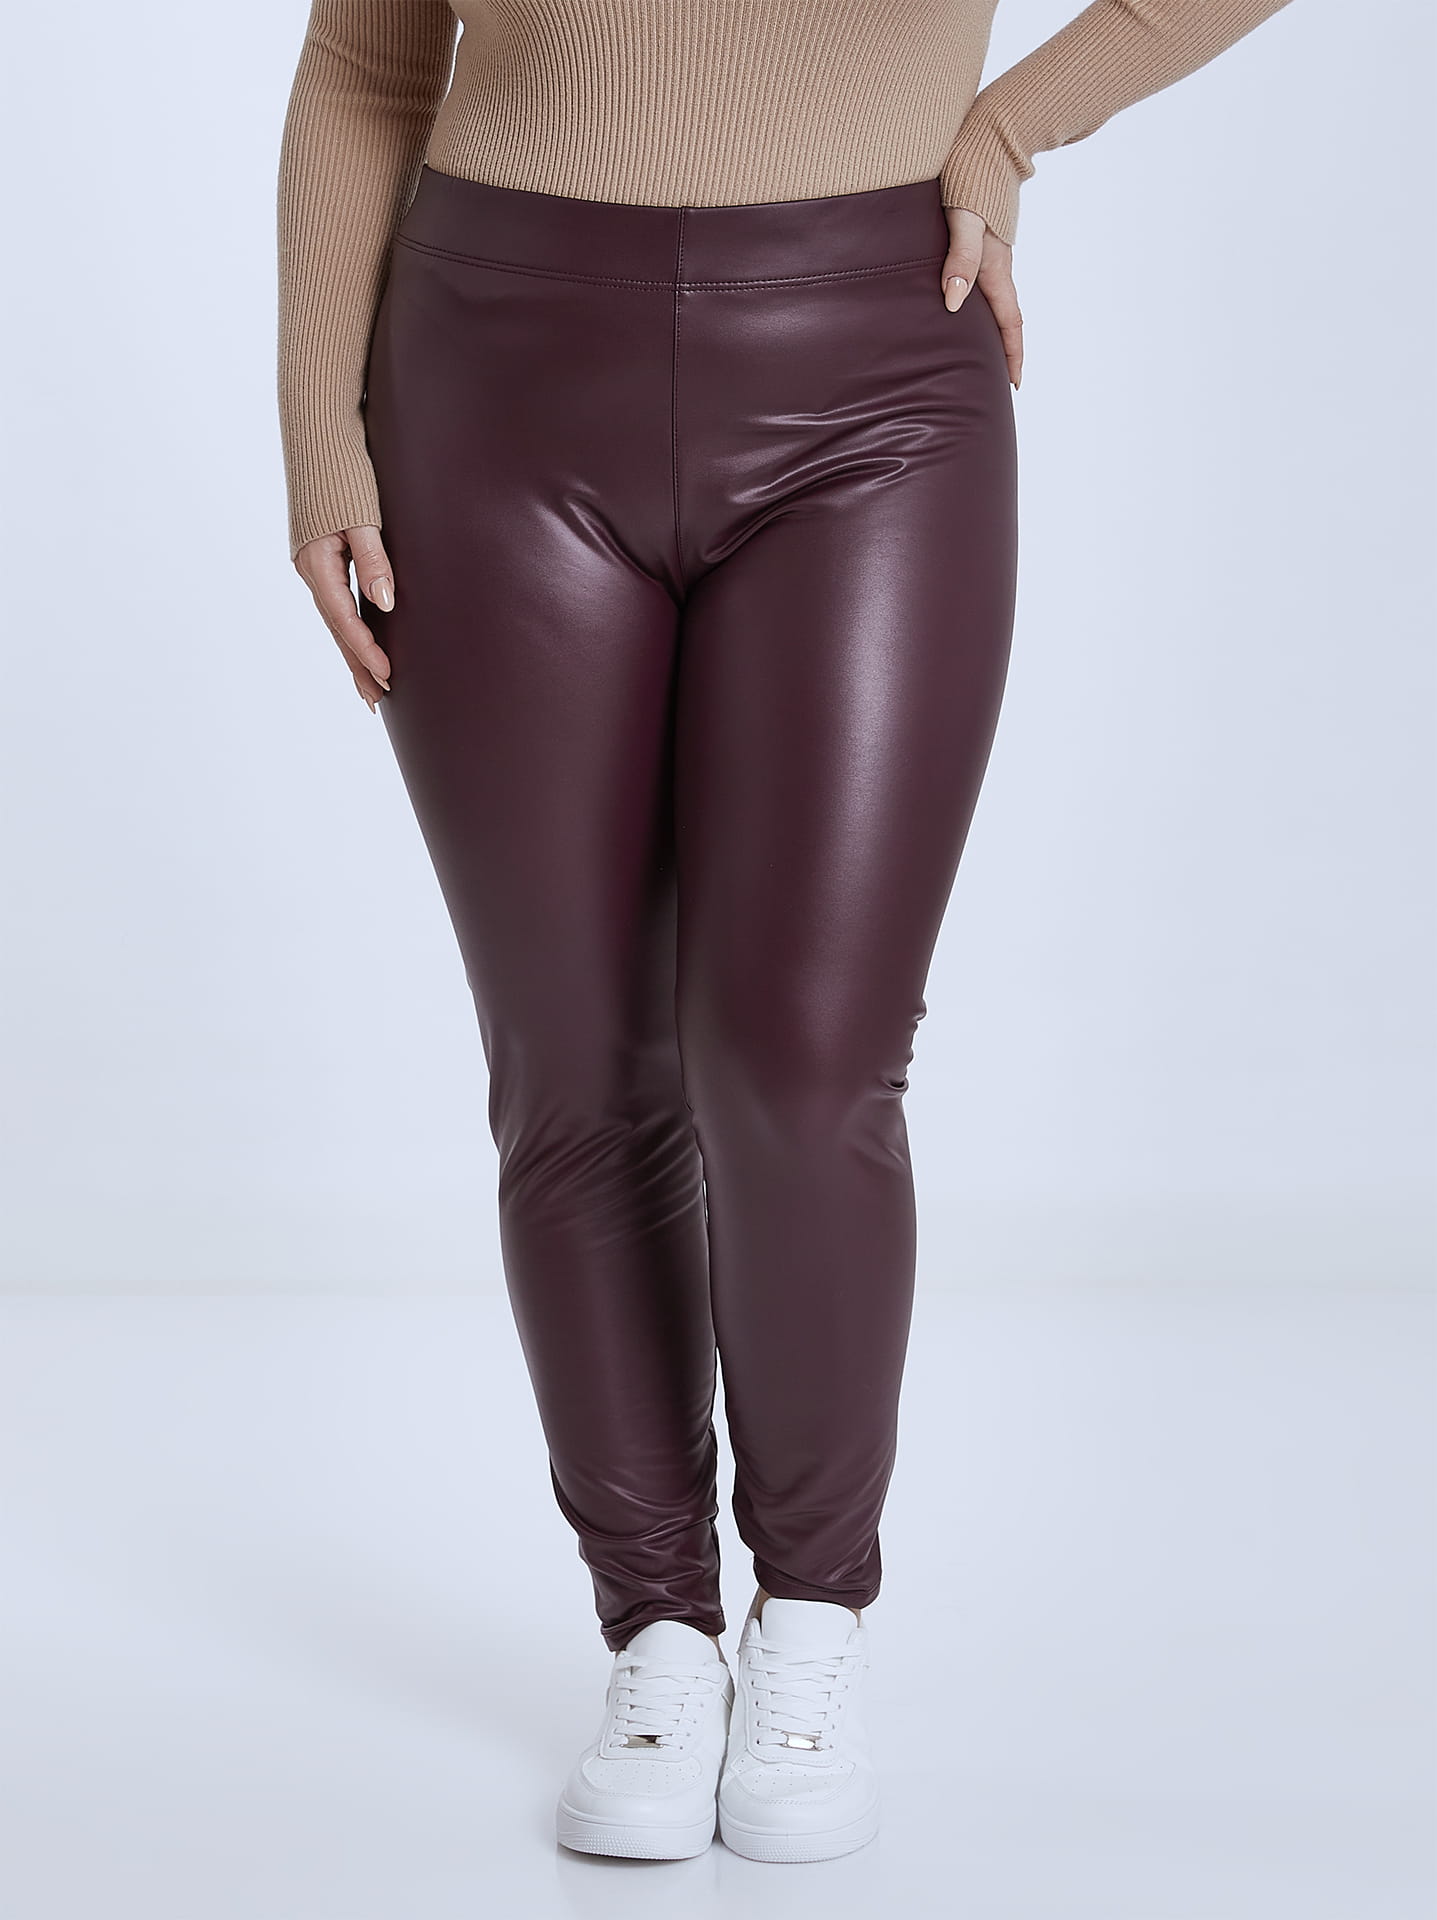 Leather effect leggings with fleece lining curvy in dark purple